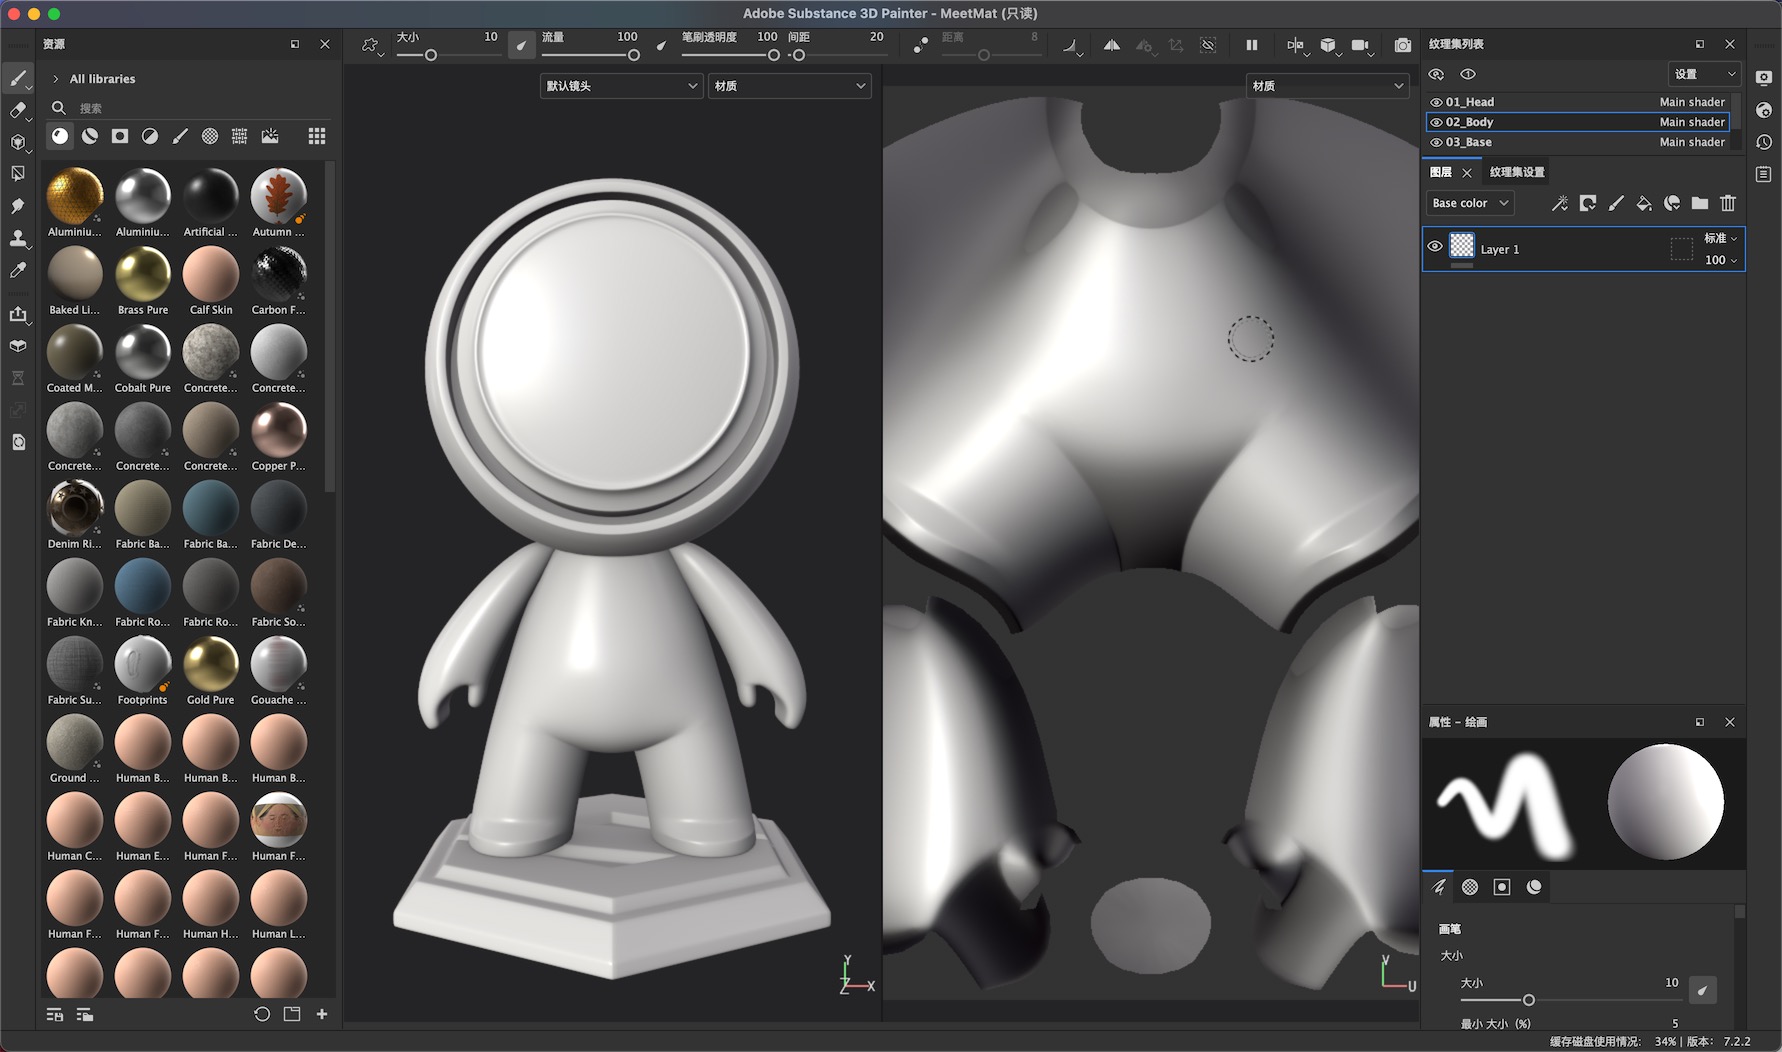 Adobe Substance 3D Painter 8.3.0 for Mac|Mac版下载 | 三维图形设计软件